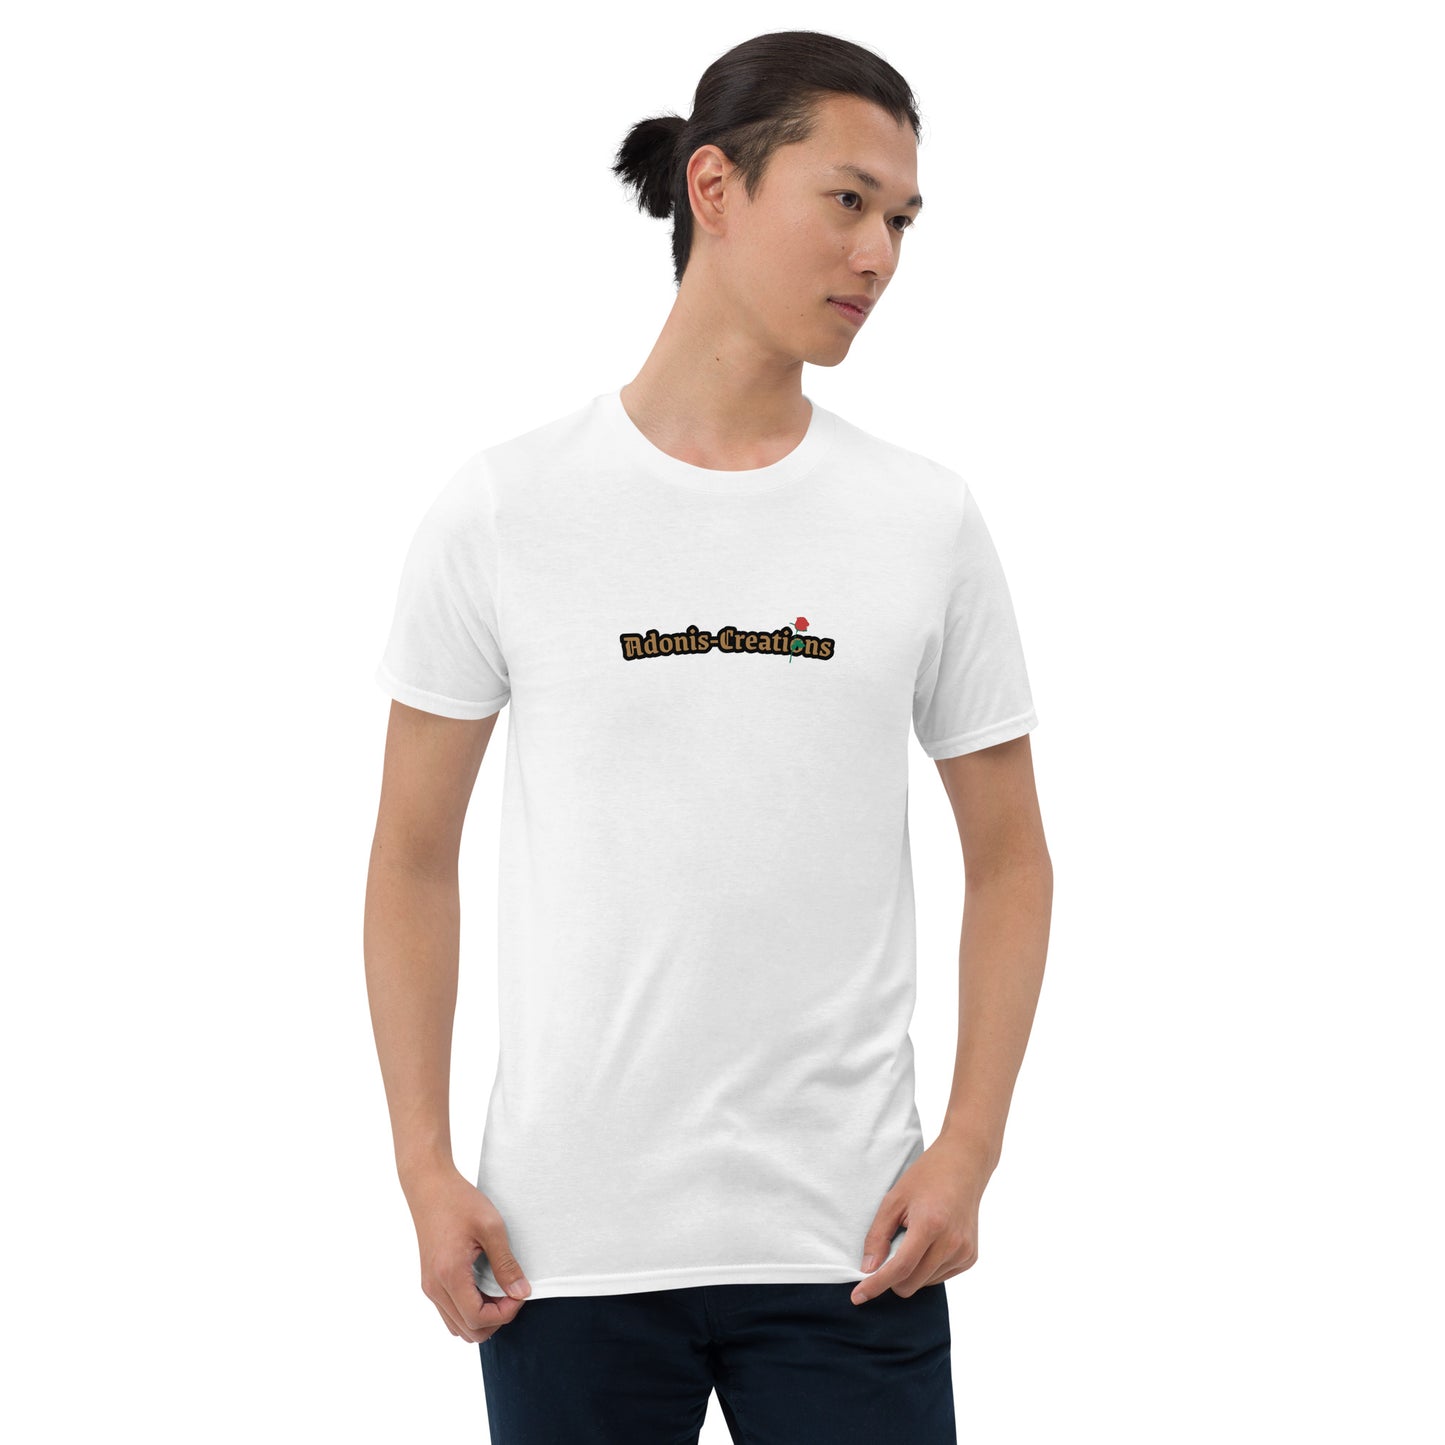 Adonis-Creations - Short-Sleeve Men's Cotton T-Shirt